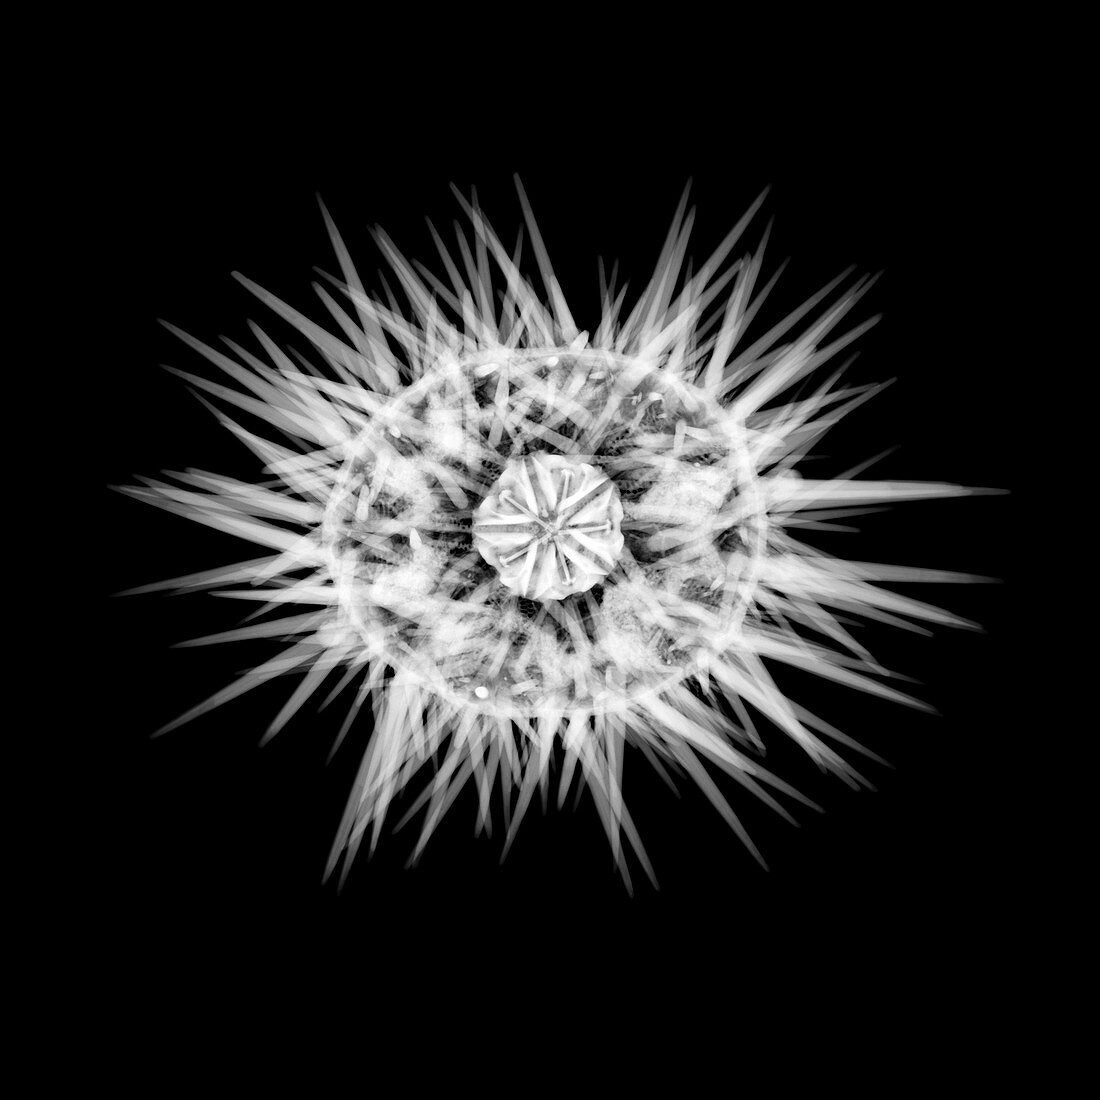 Sea urchin, X-ray